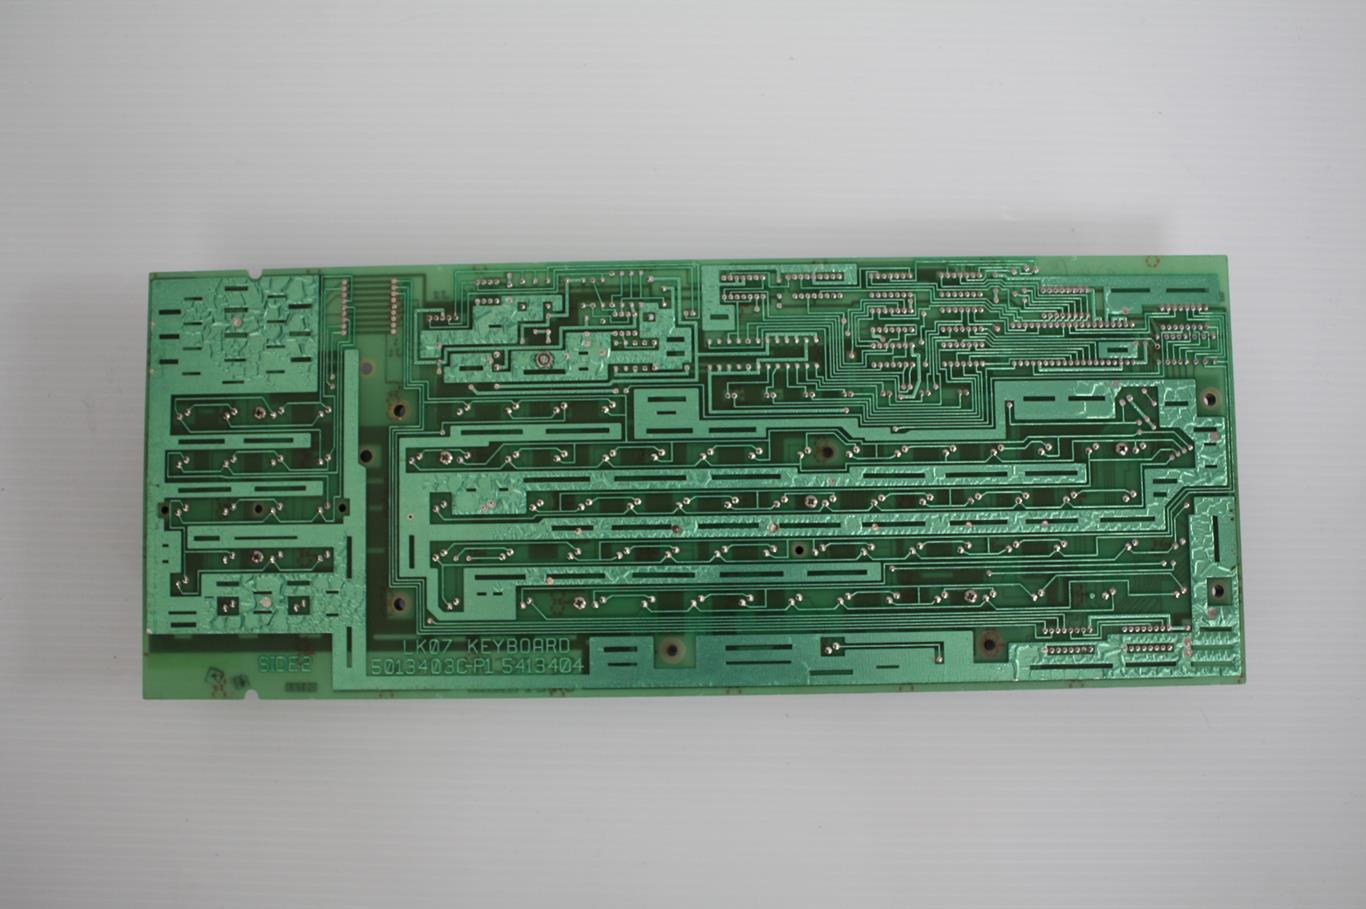 DEC VT100 - keyboard circuit board back